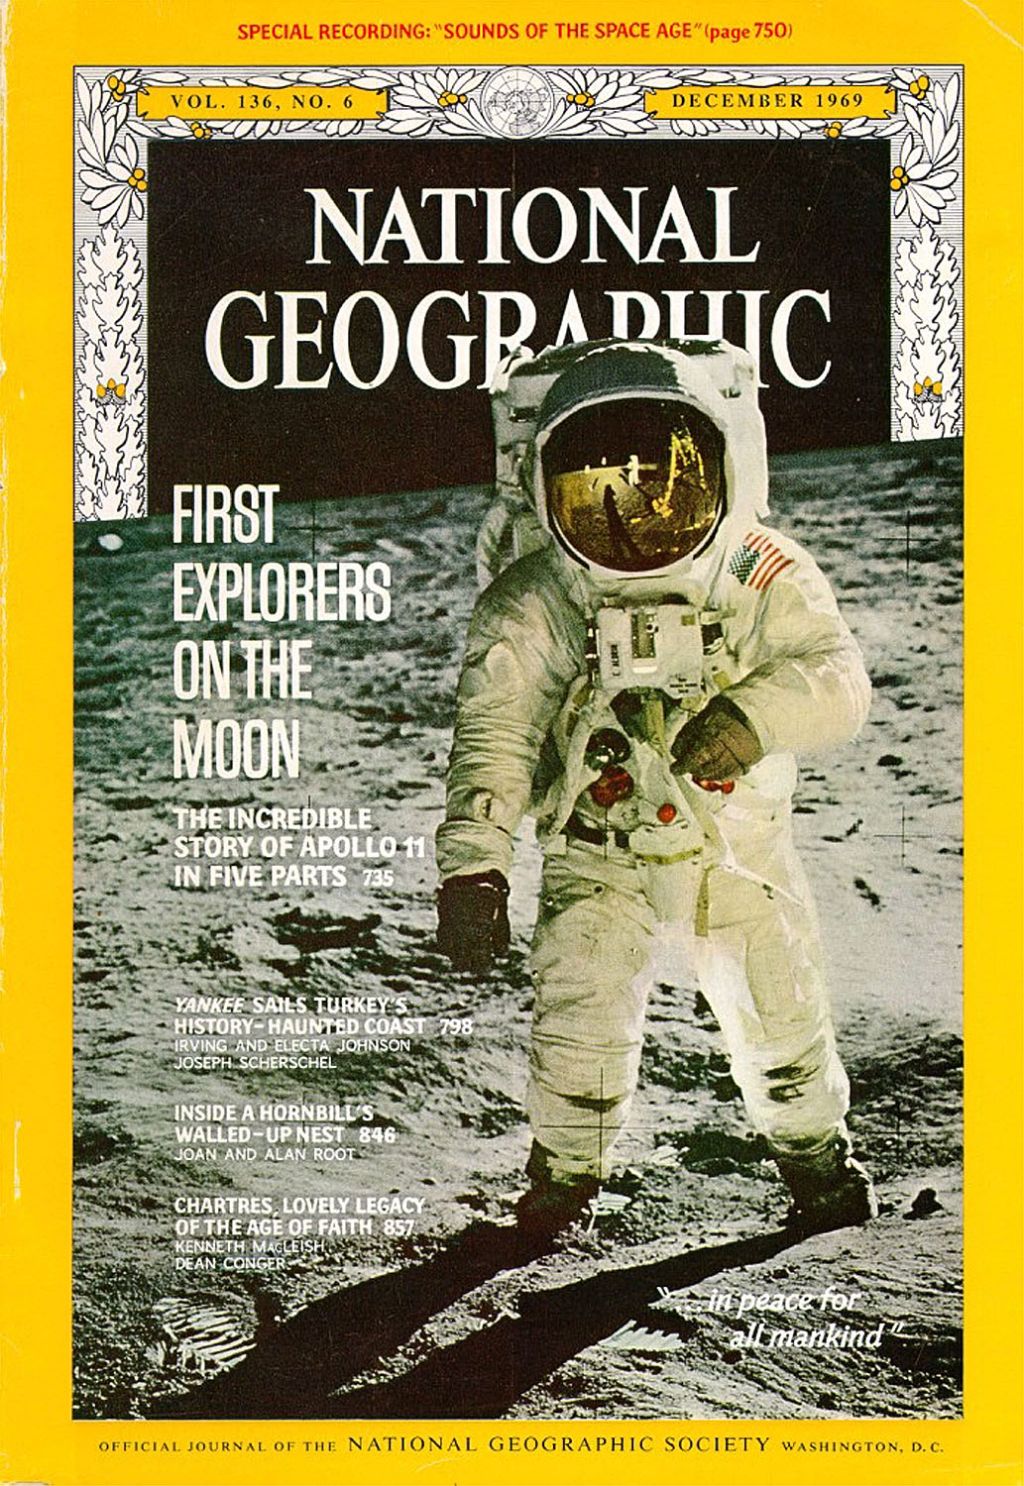 33rd Anniversary Of Apollo 11 Landing On The Moon